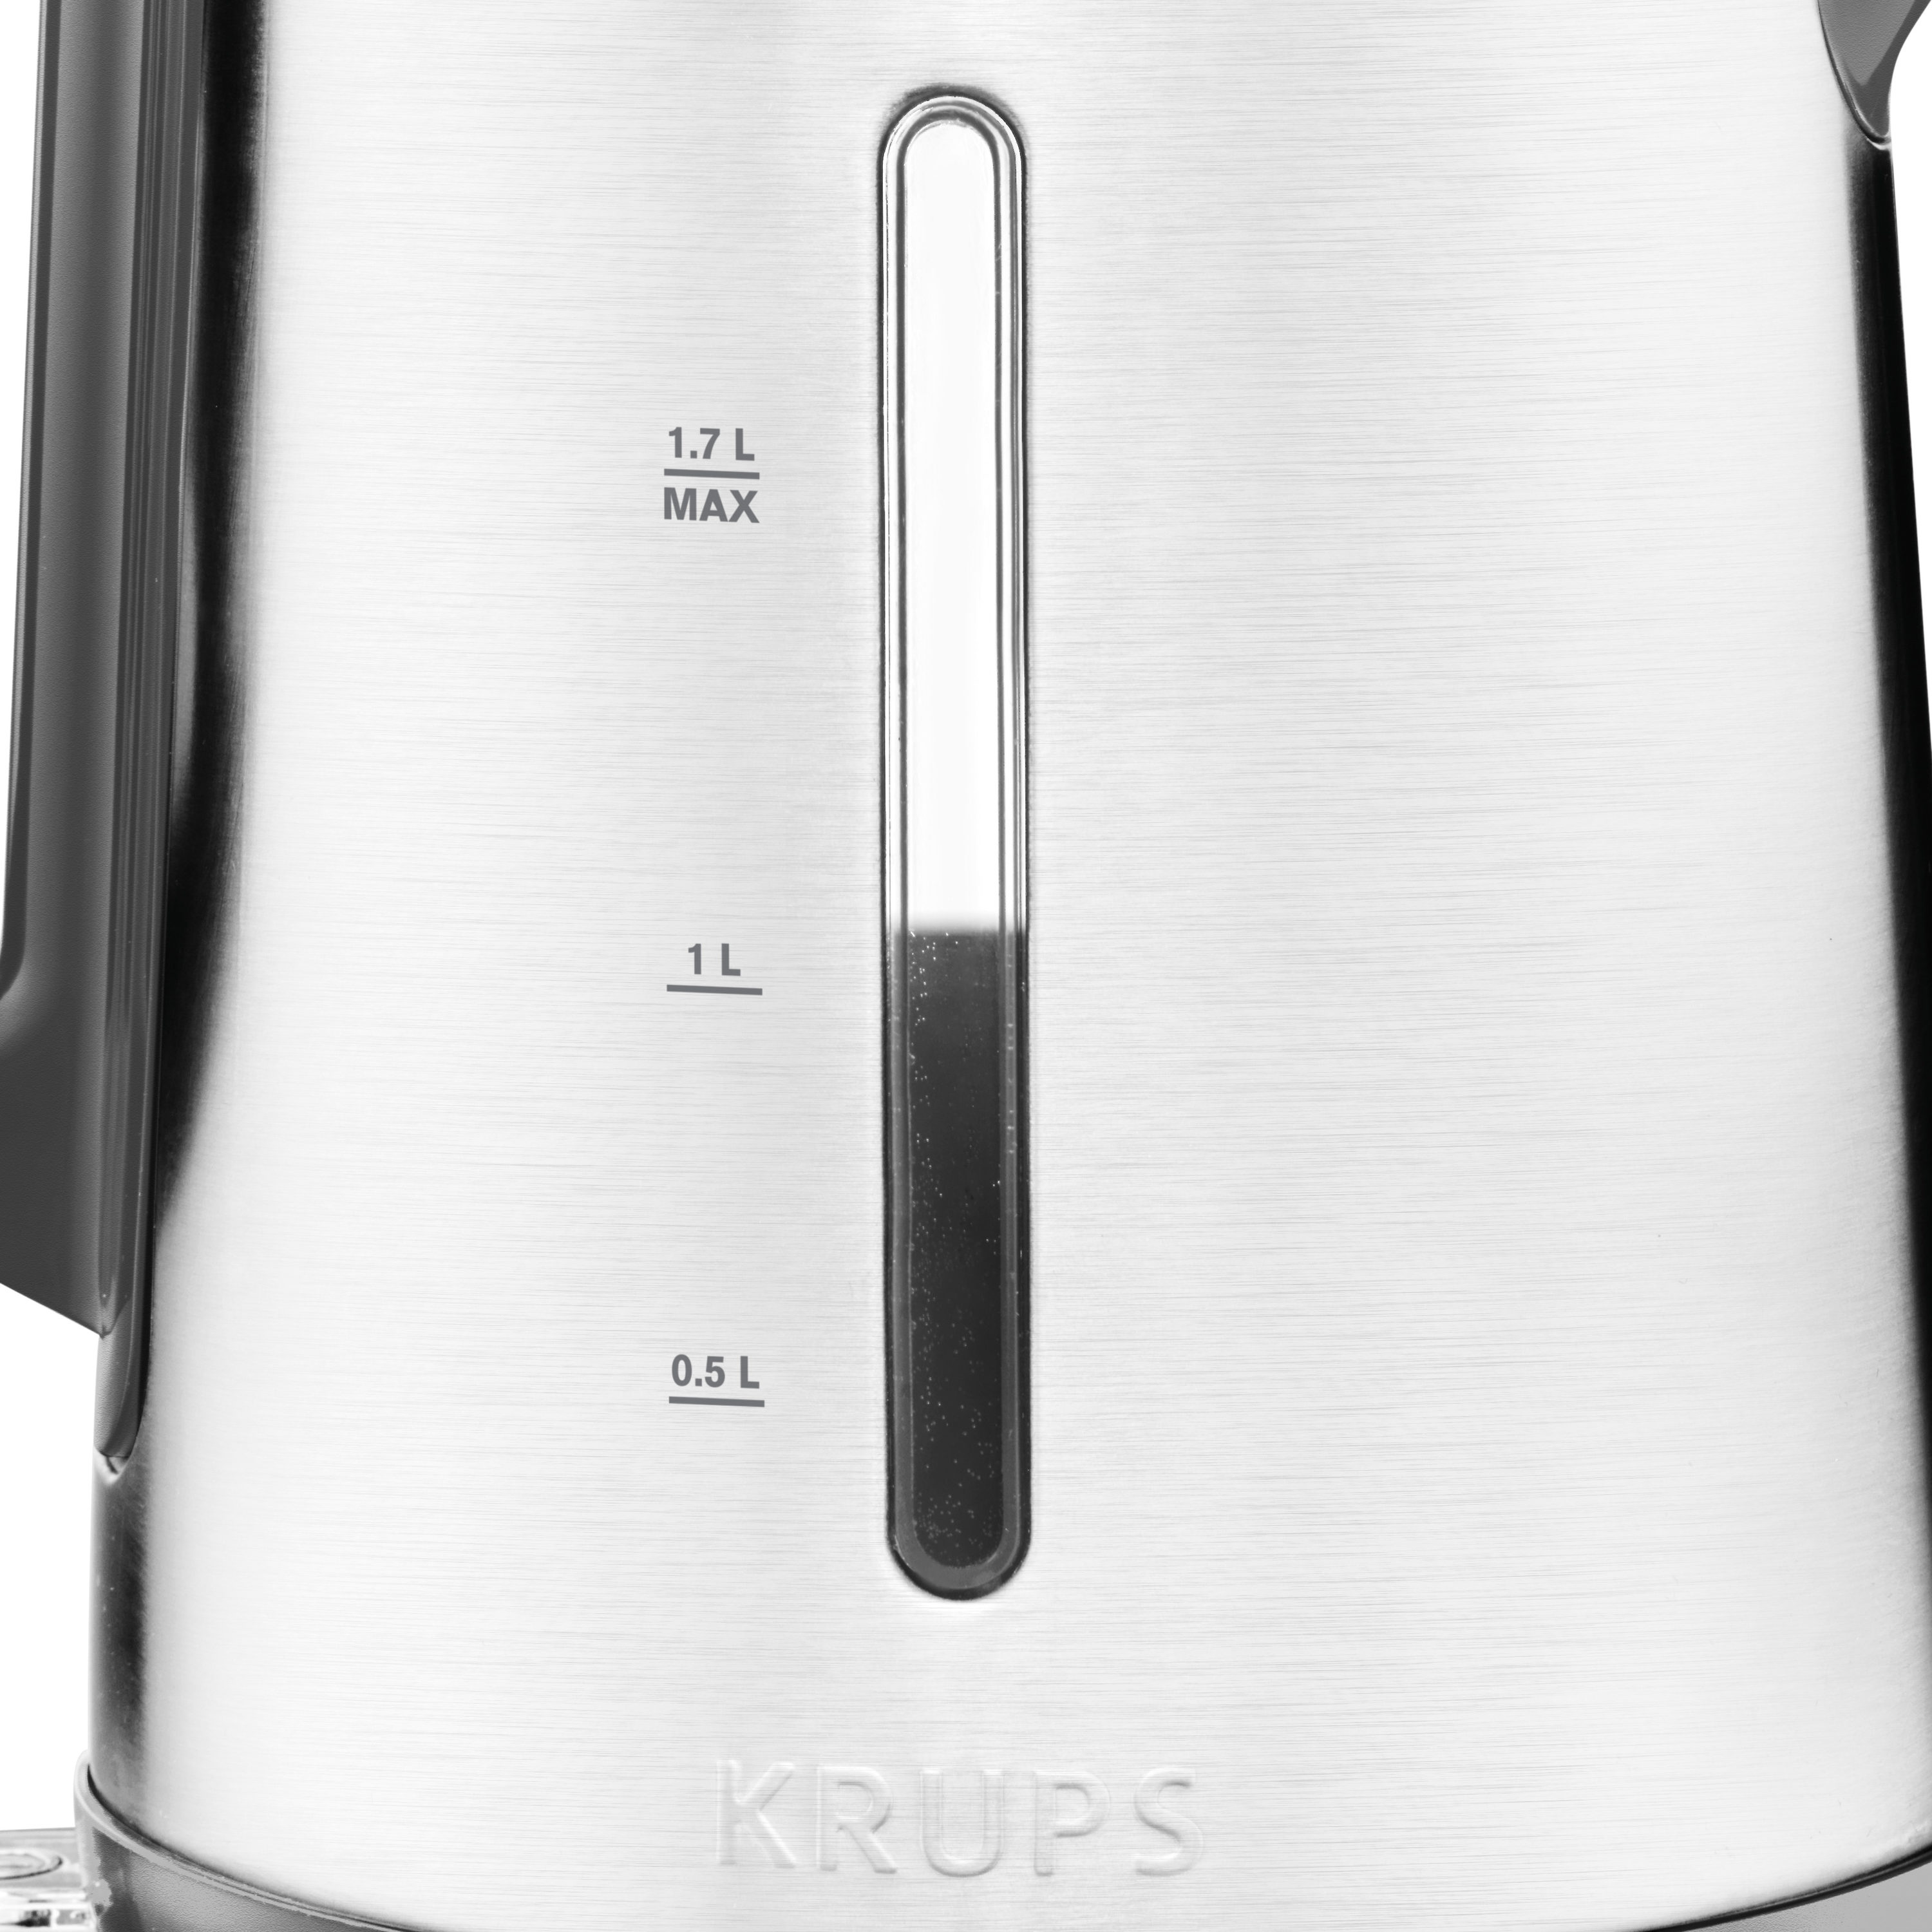 Krups electric kettle